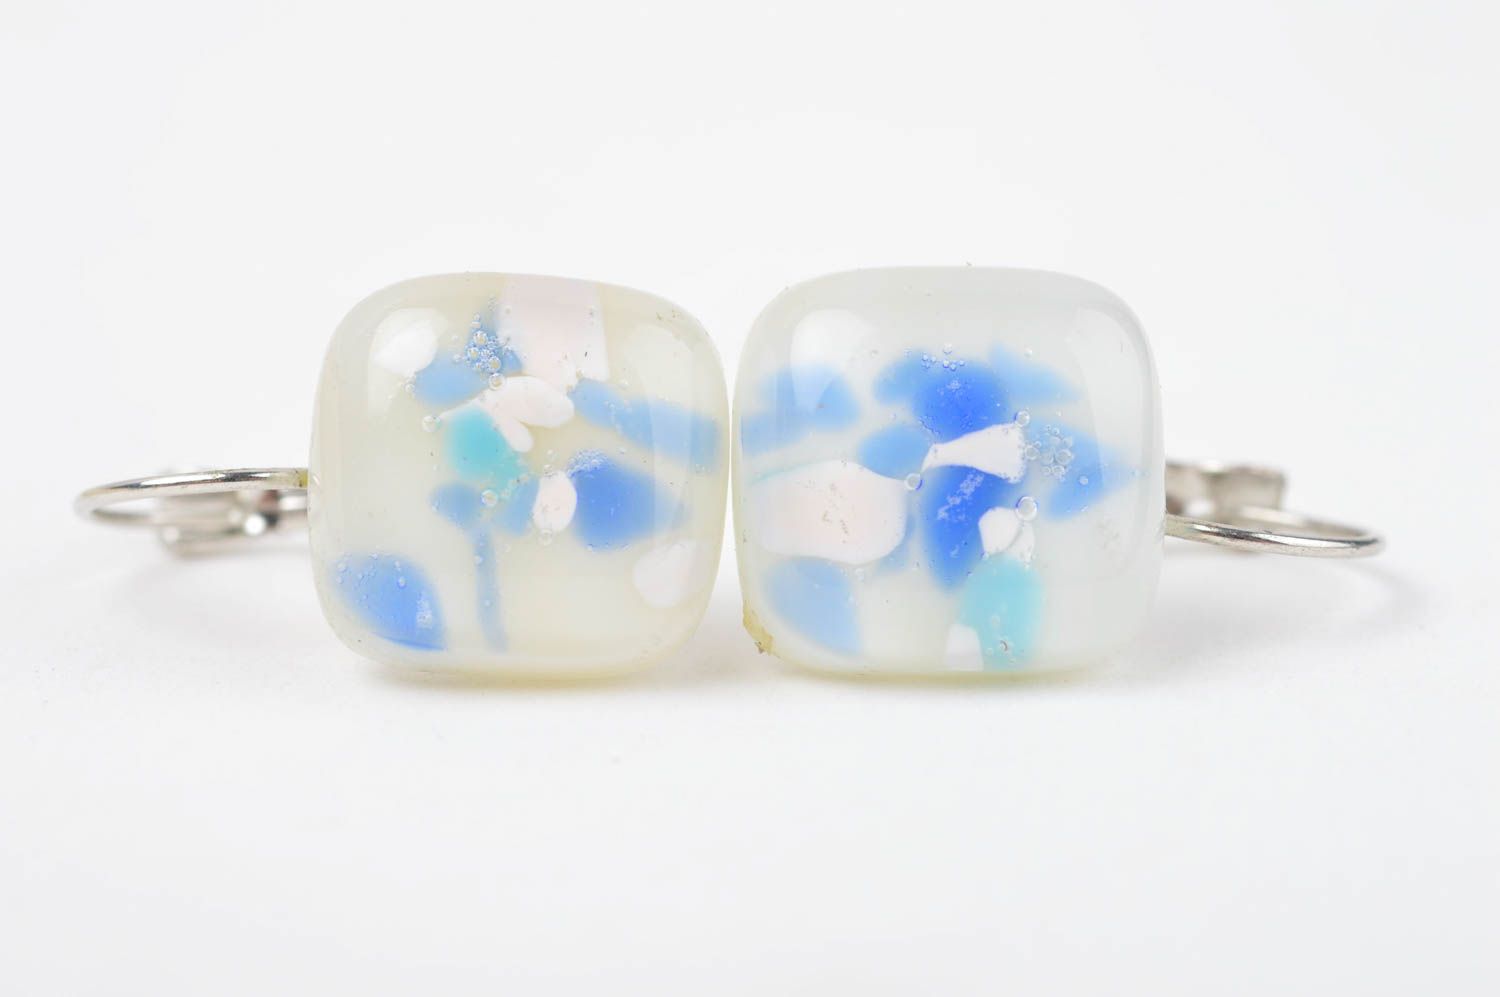 Beautiful handmade glass earrings glass fusing cool jewelry designs gift ideas photo 2